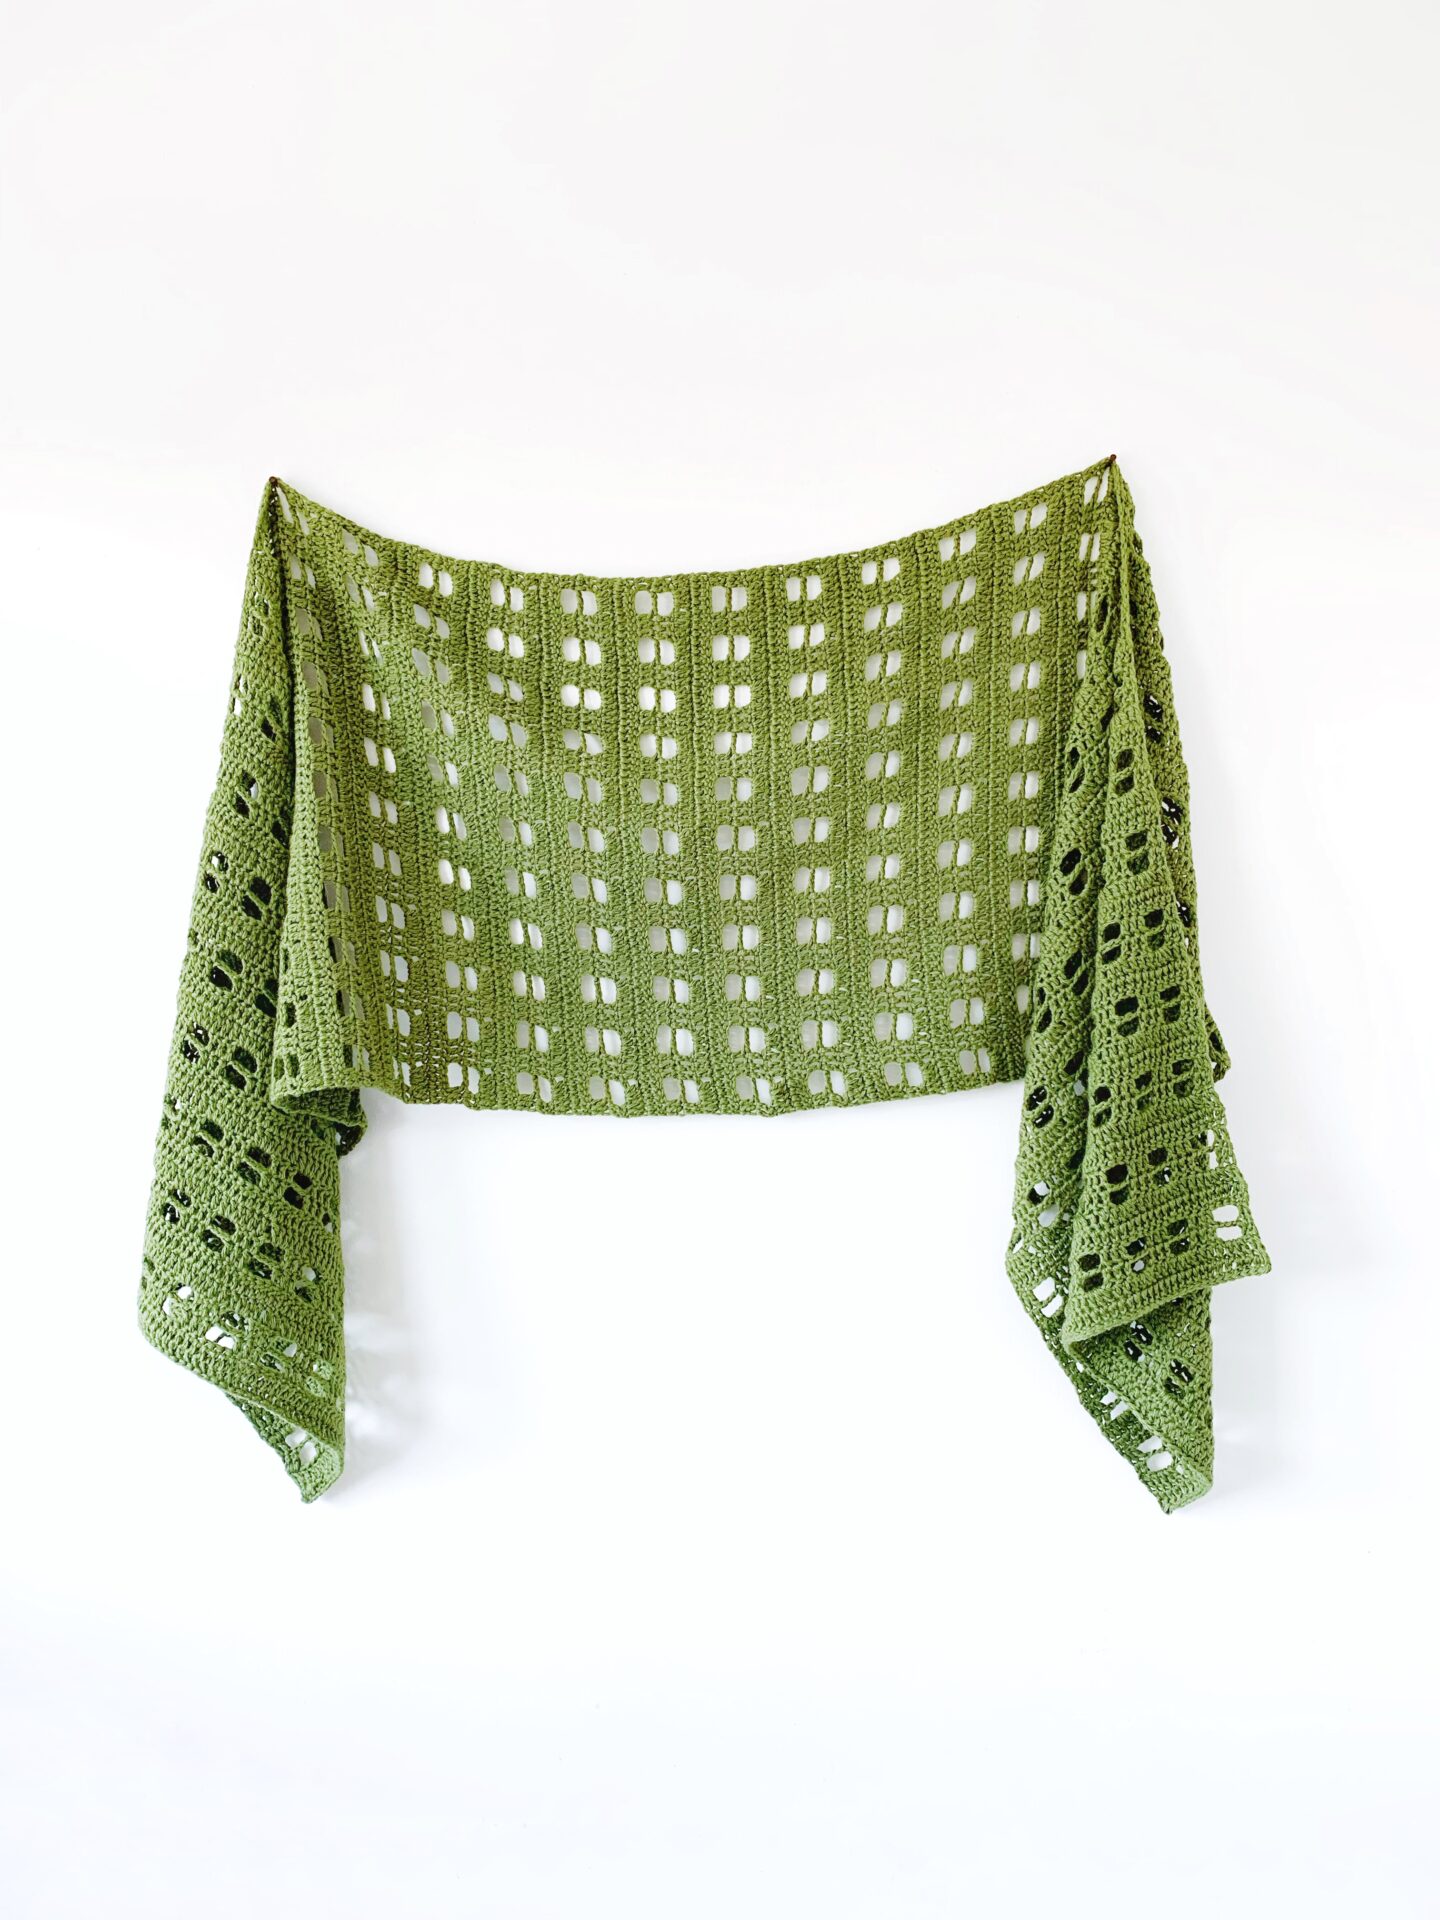 Silverwood Sideways Shawl - Free Crochet Pattern